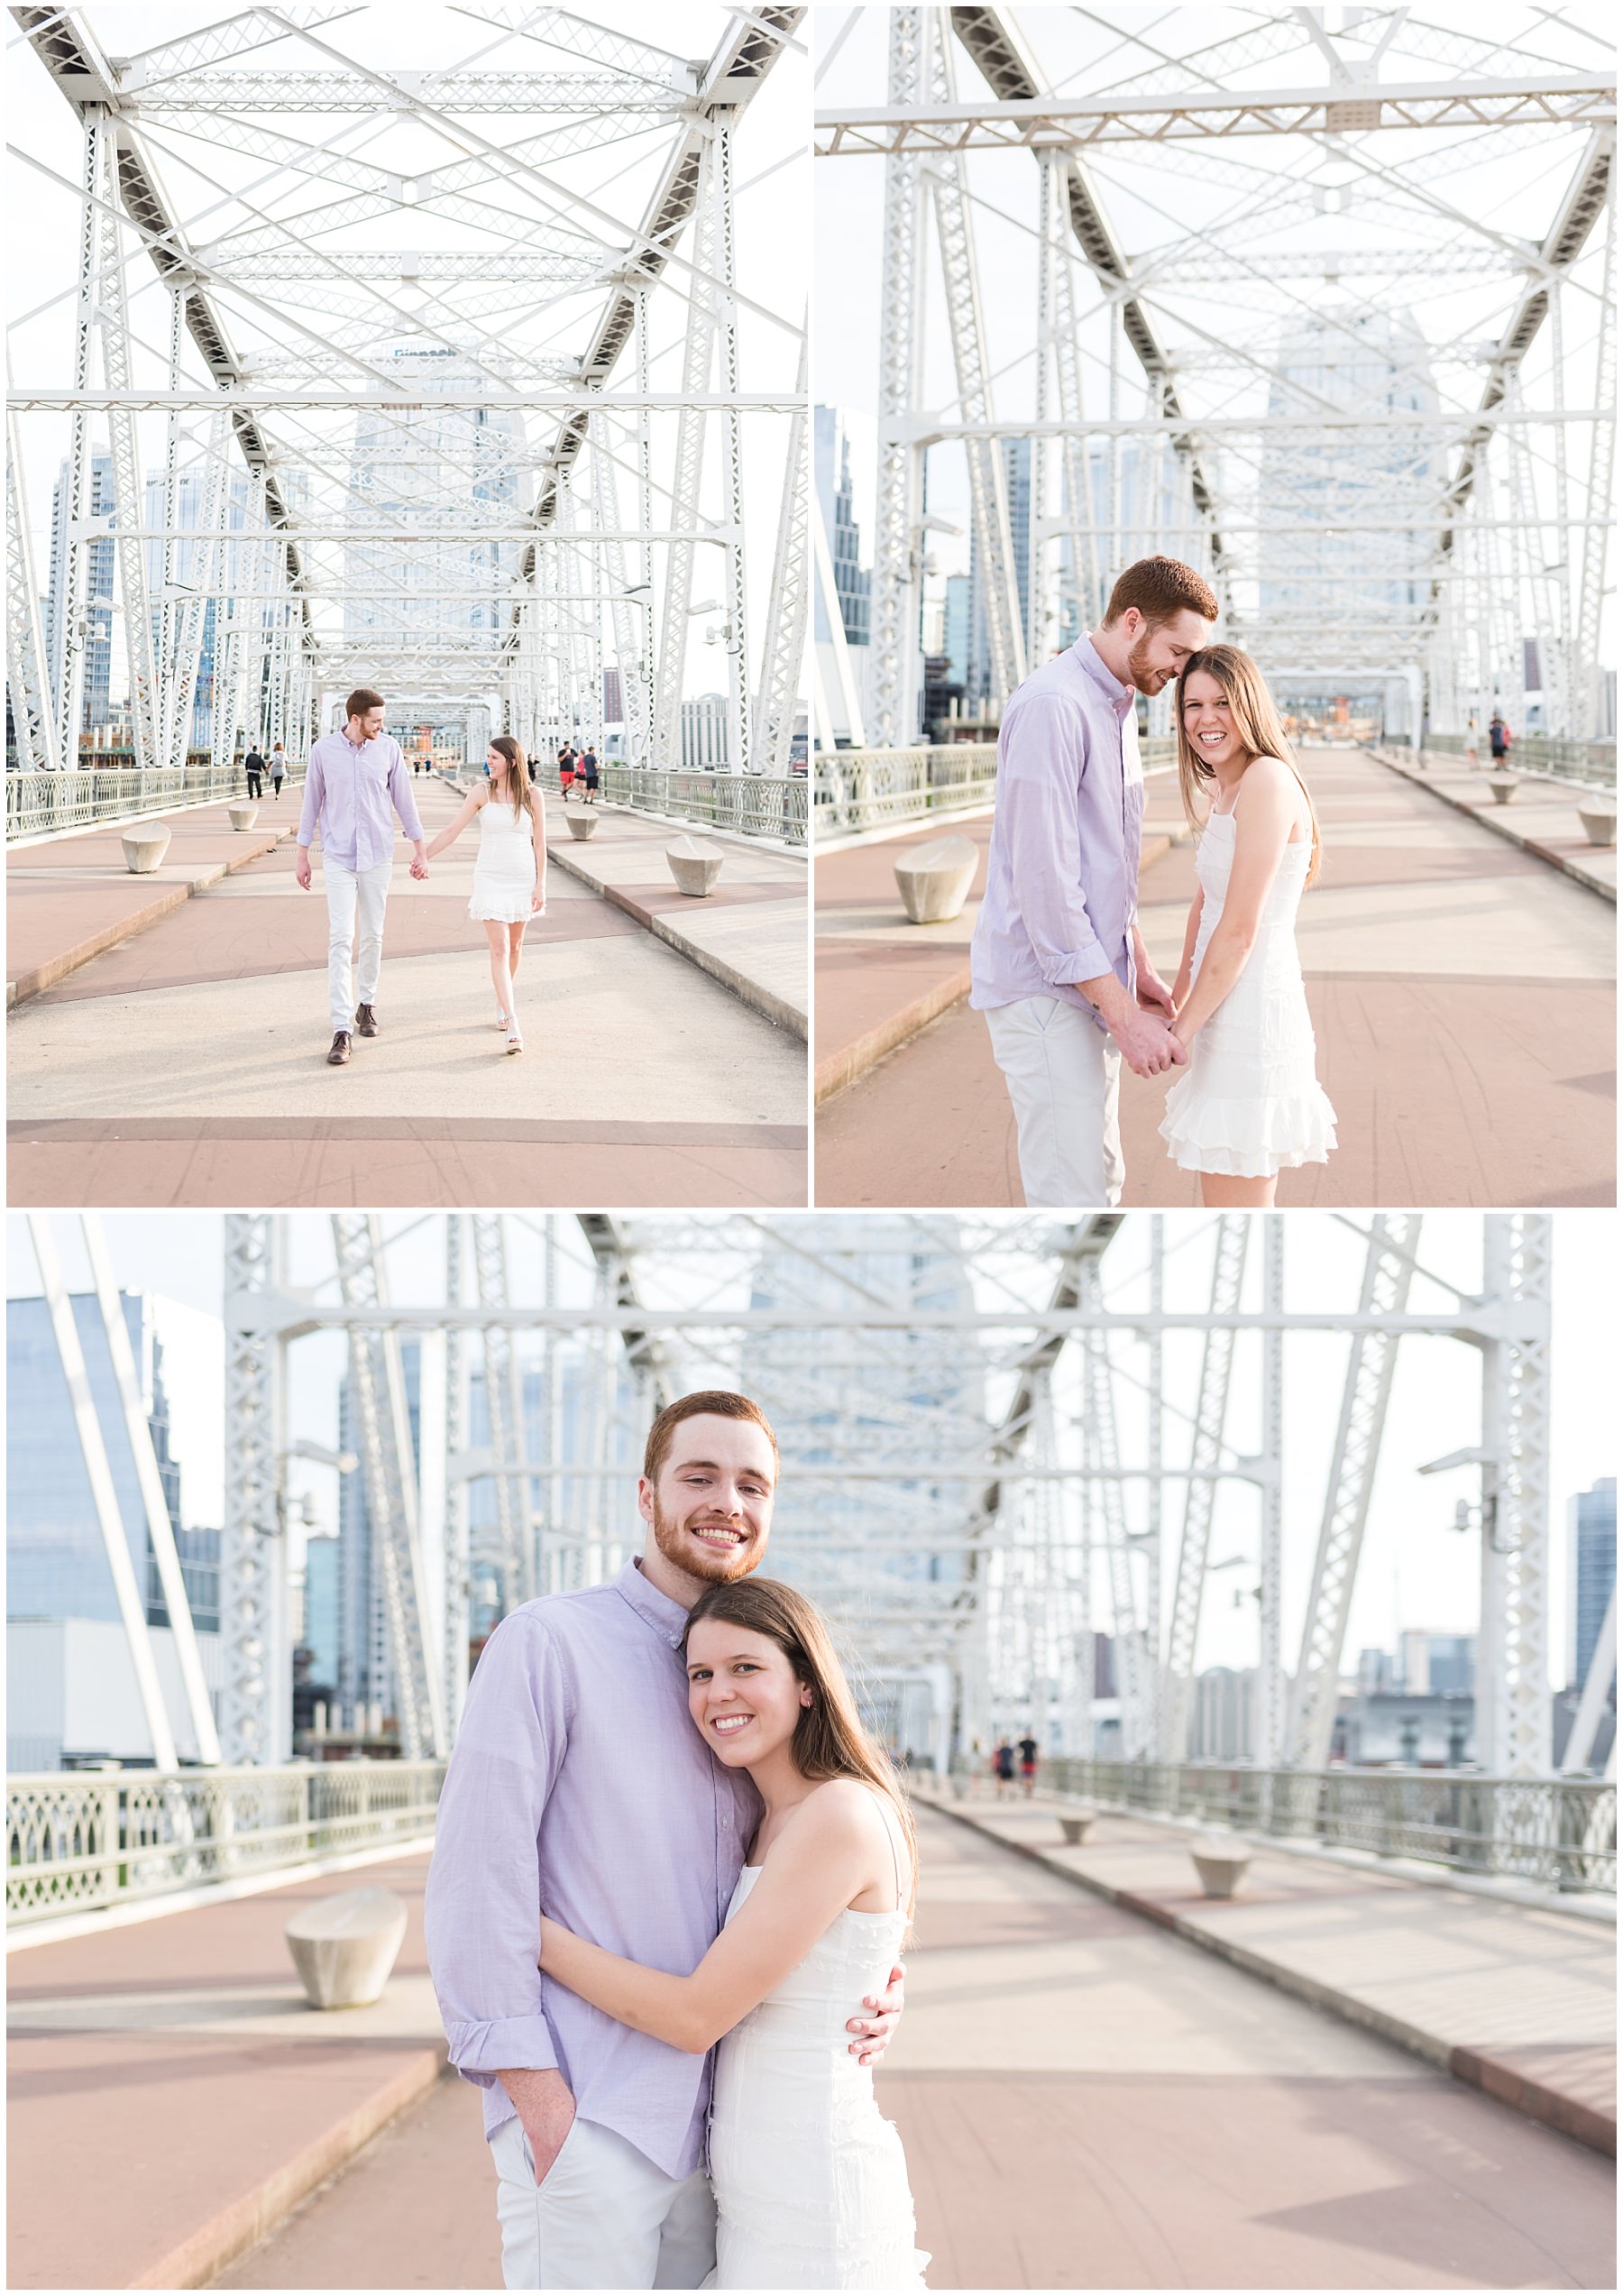 Nashville couple posing for engagement photos on the Pedestrian Bridge